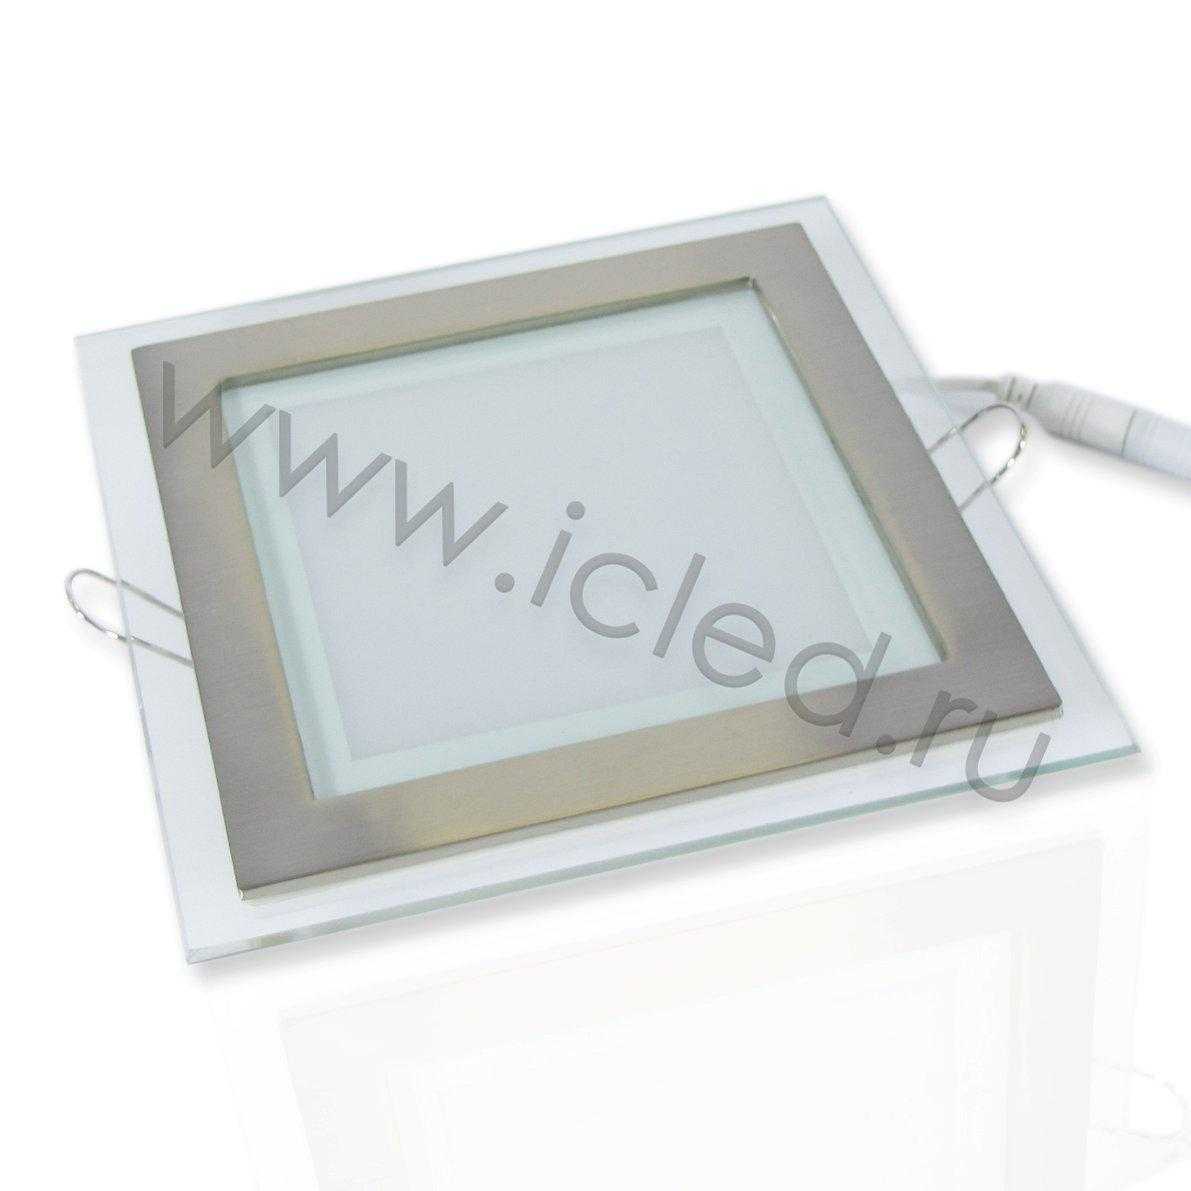 Светодиодные светильники Светодиодный светильник встраиваемый IC-SS L160  (12W, White)